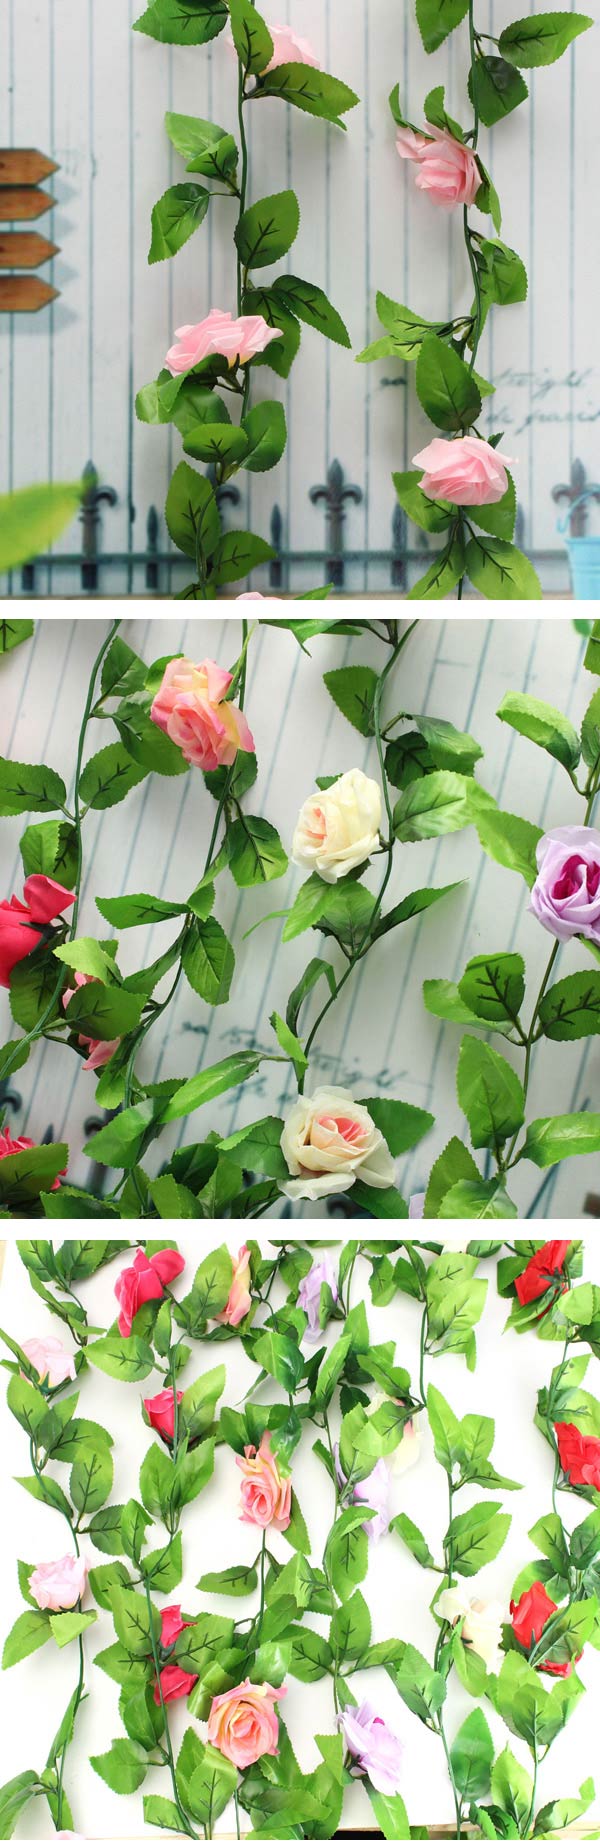 2pcs-Artificial-Plastic-Rose-Flower-Vines-Garland-Home-Garden-Decoration-997281-2